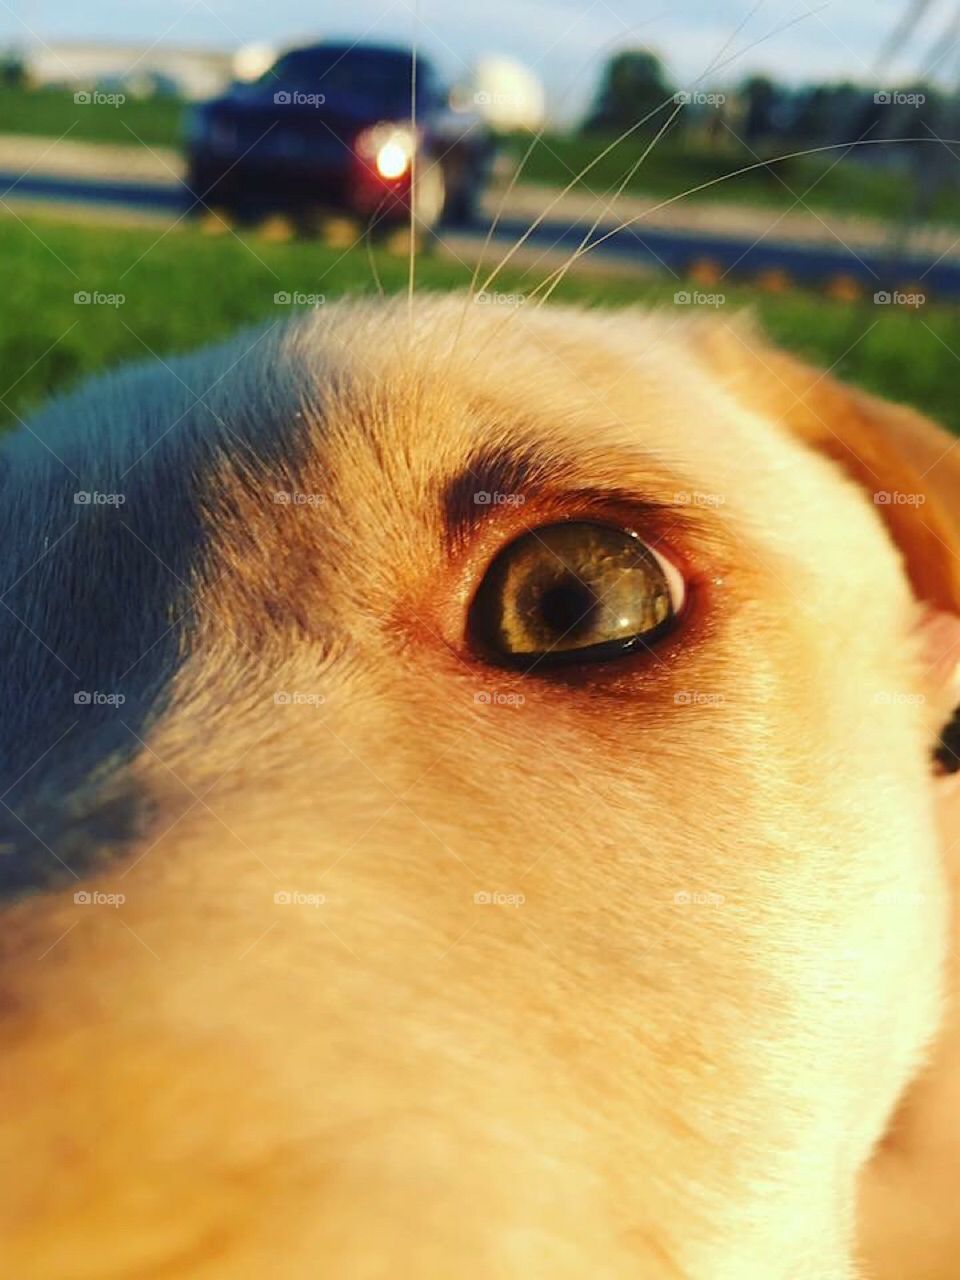 Dog eye